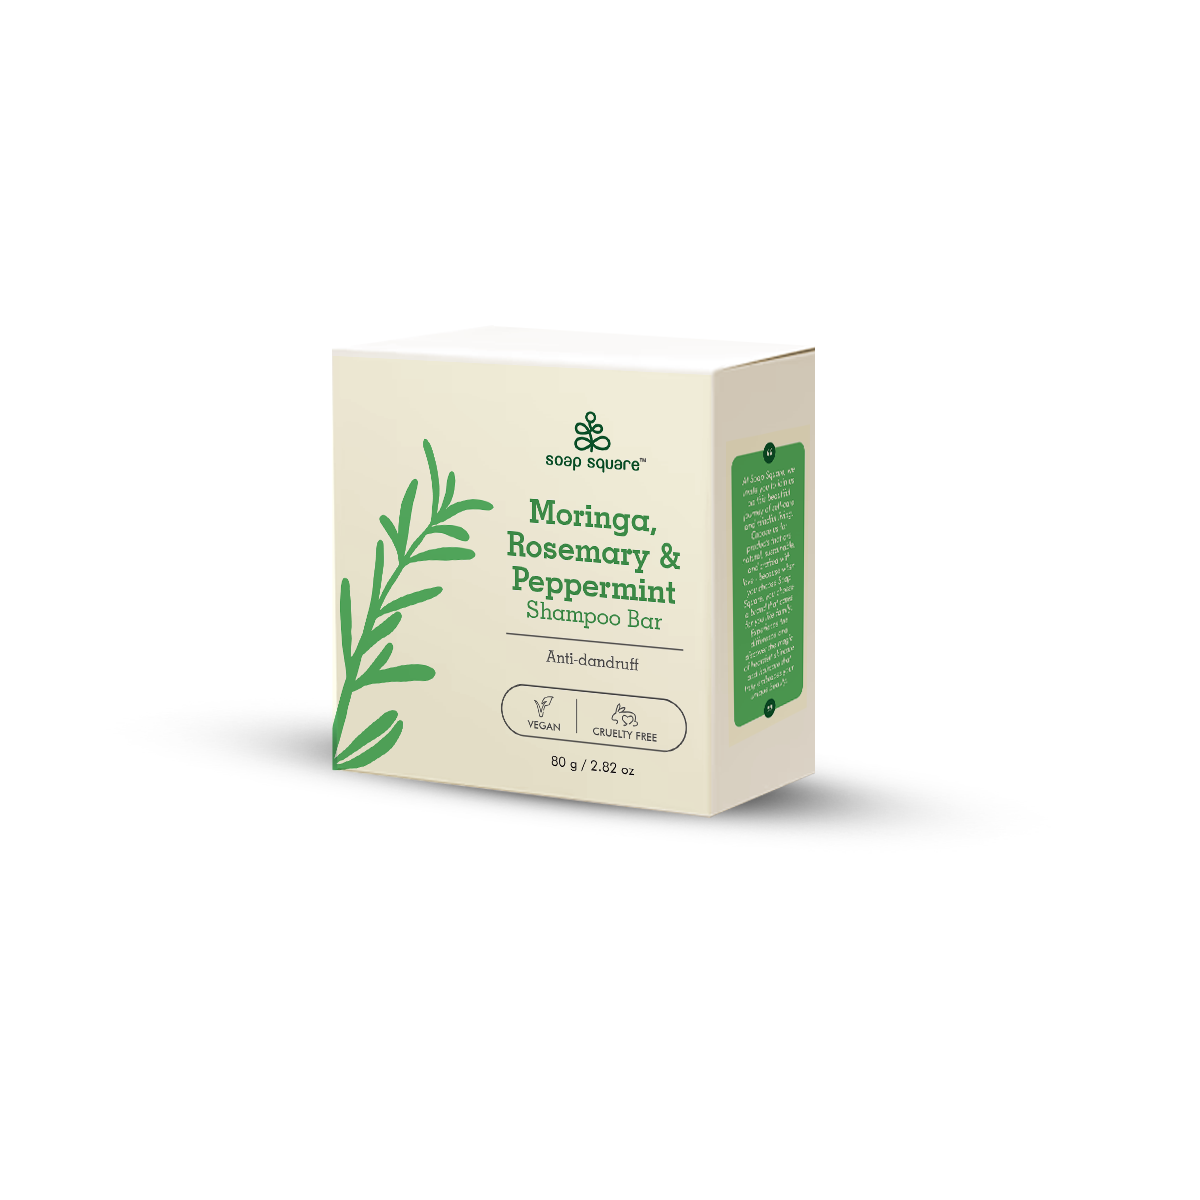 Moringa, Rosemary & Peppermint Shampoo Bar (anti-dandruff)